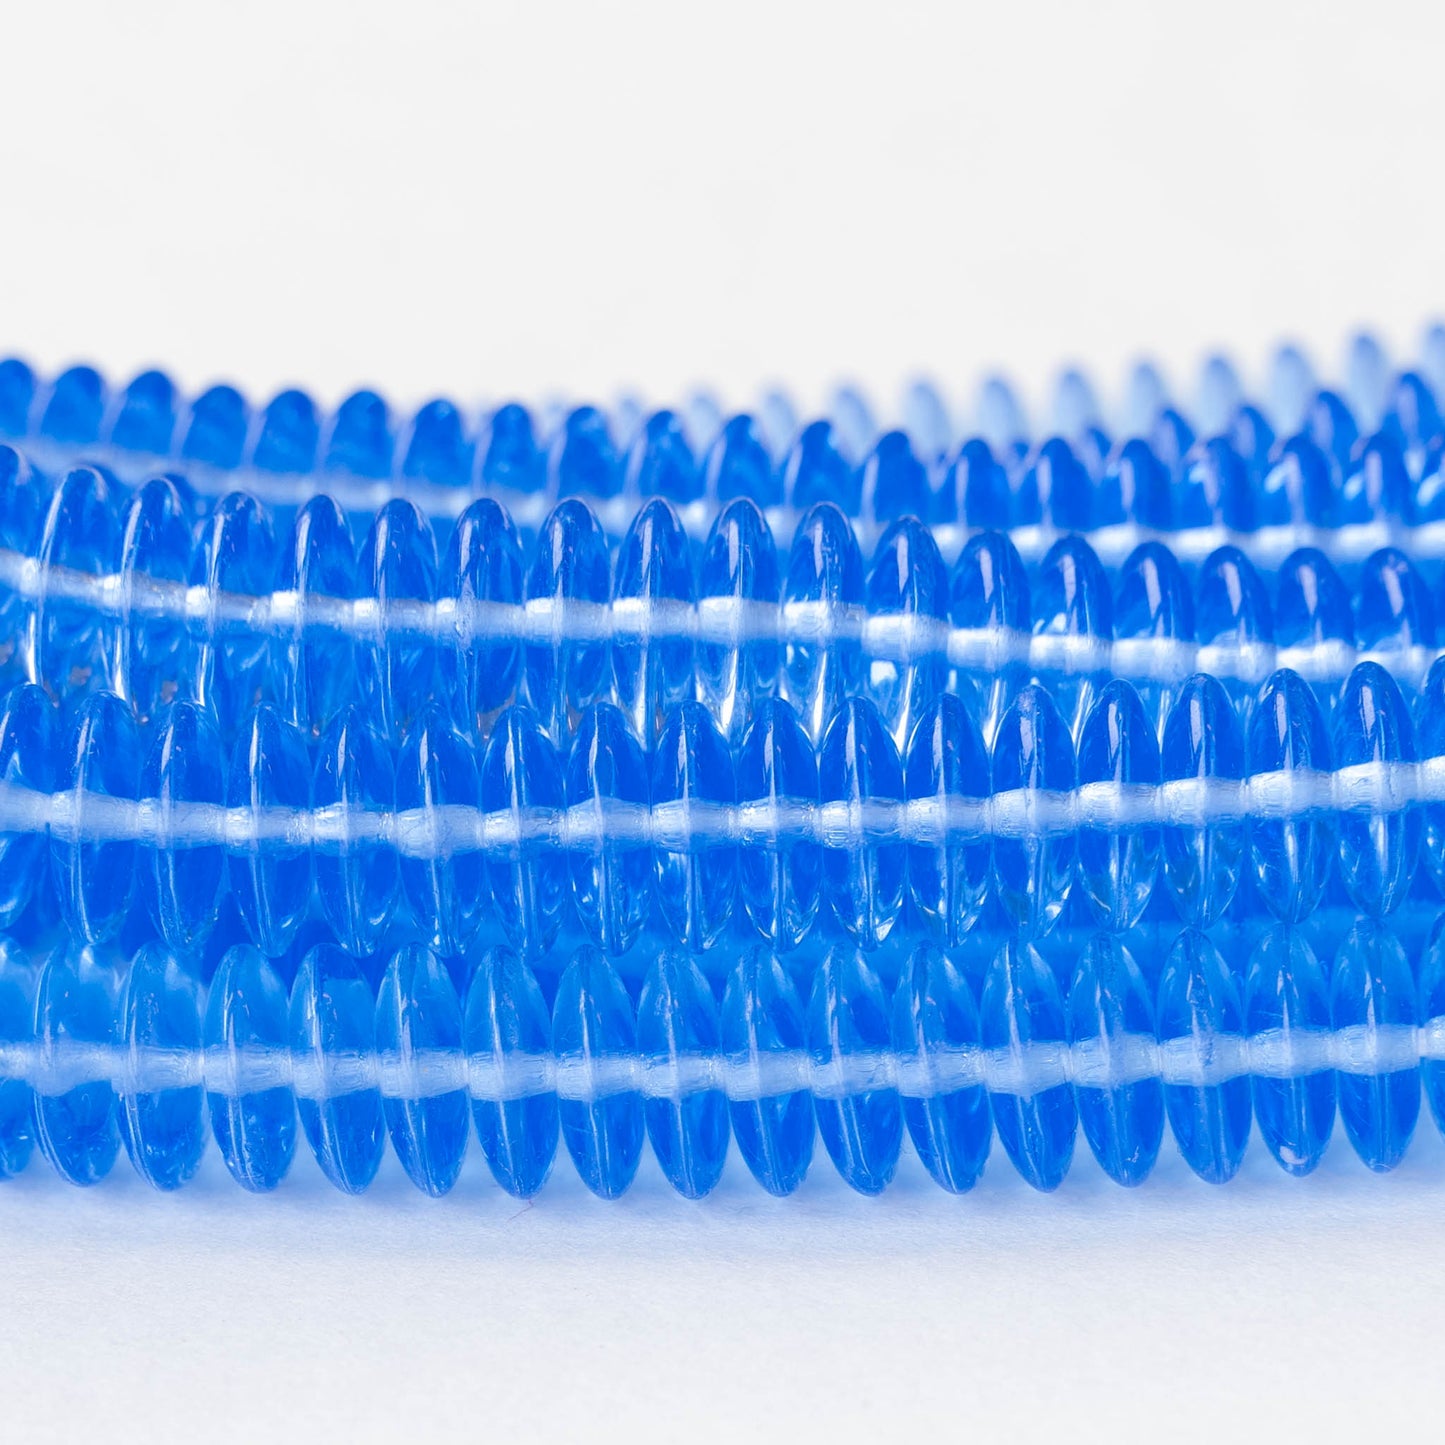 10mm Rondelle Beads - Light Sapphire Blue - 30 Beads